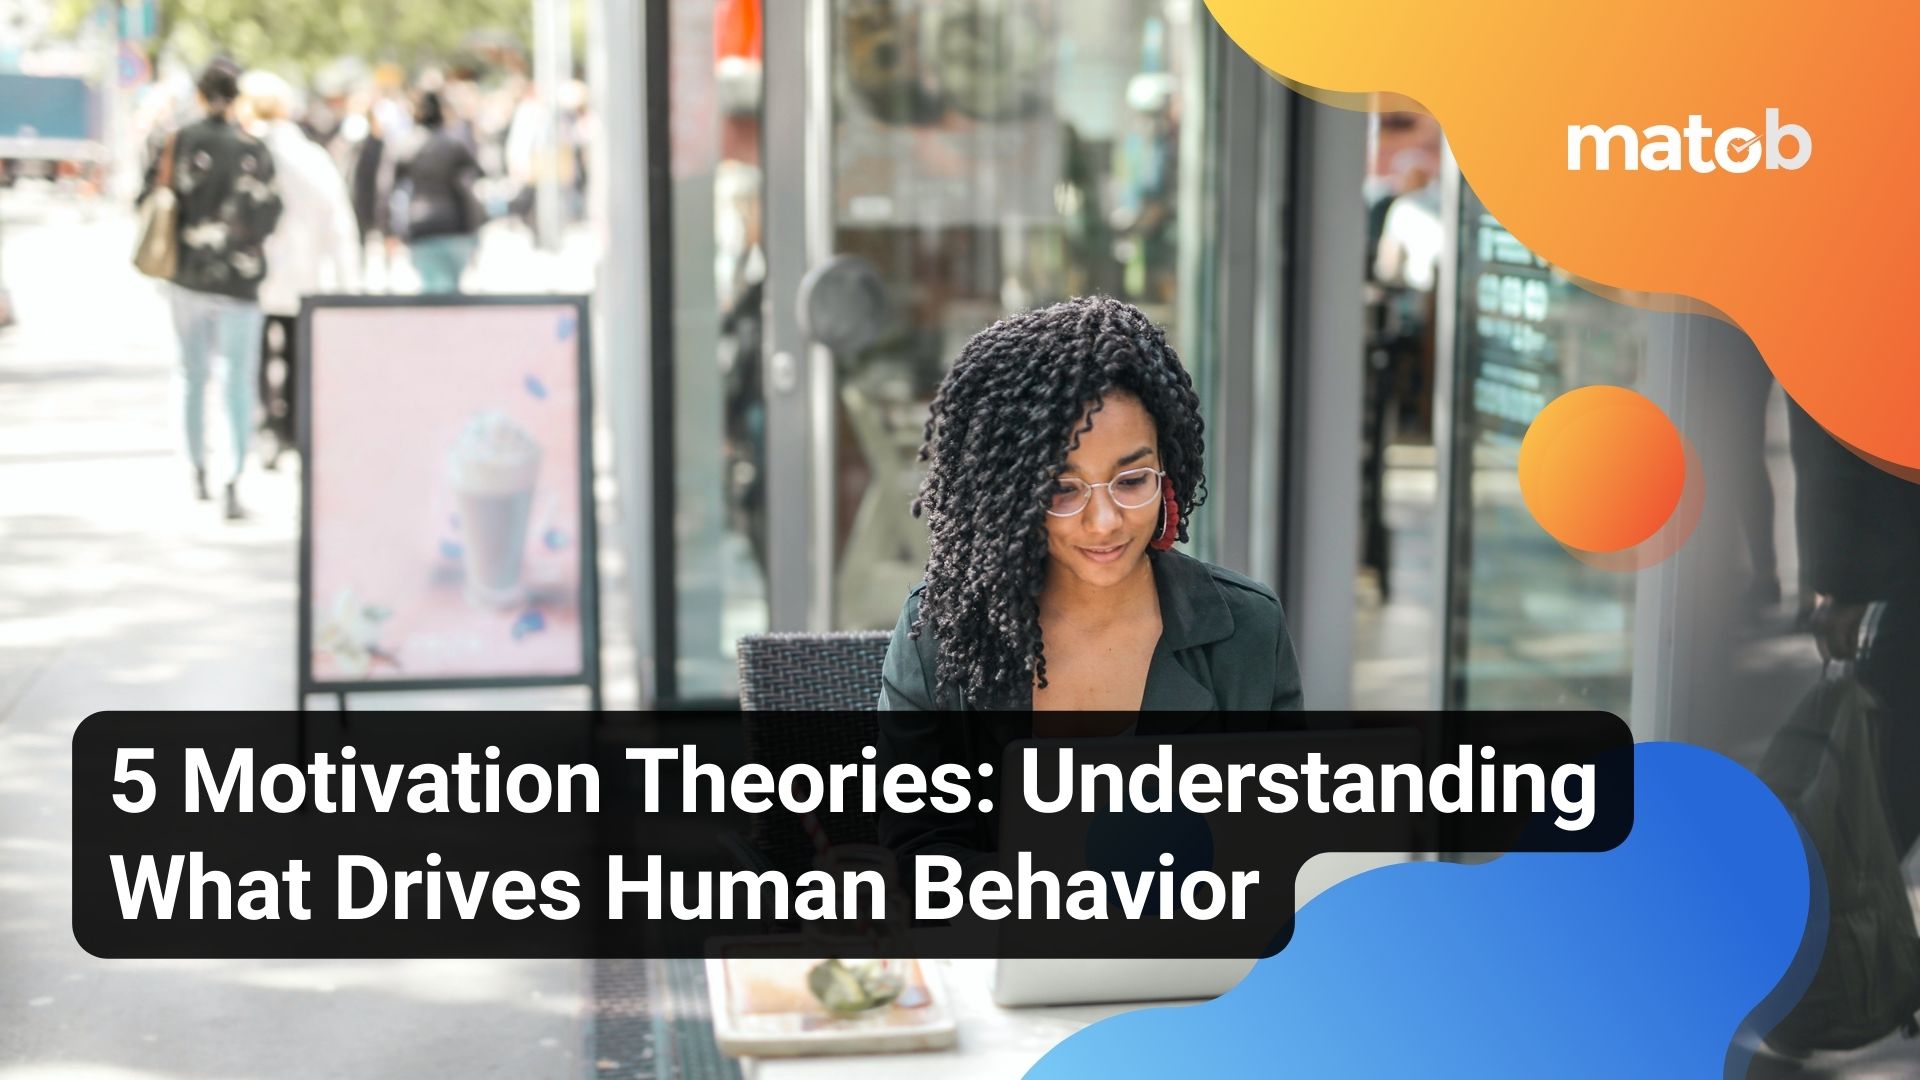 5 Motivation Theories: Understanding What Drives Human Behavior